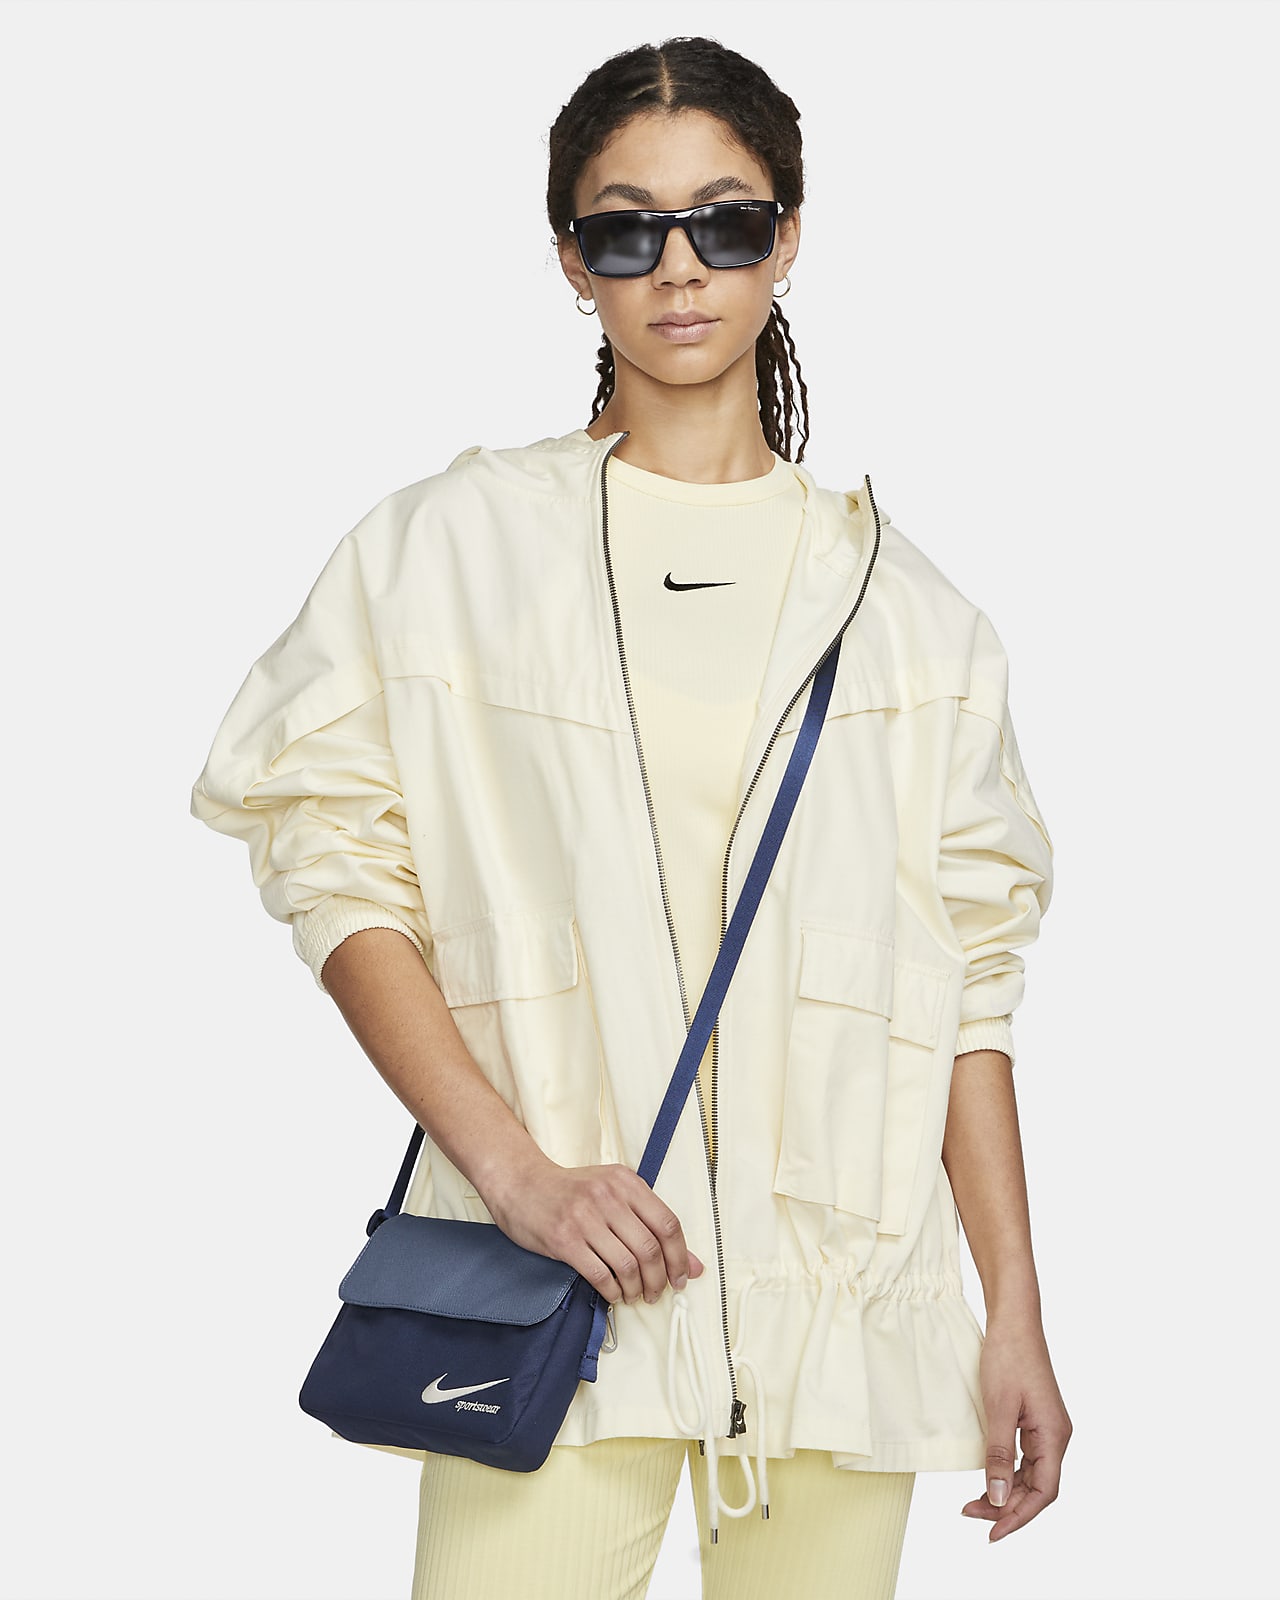 Nike Women's Futura 365 Crossbody Bag